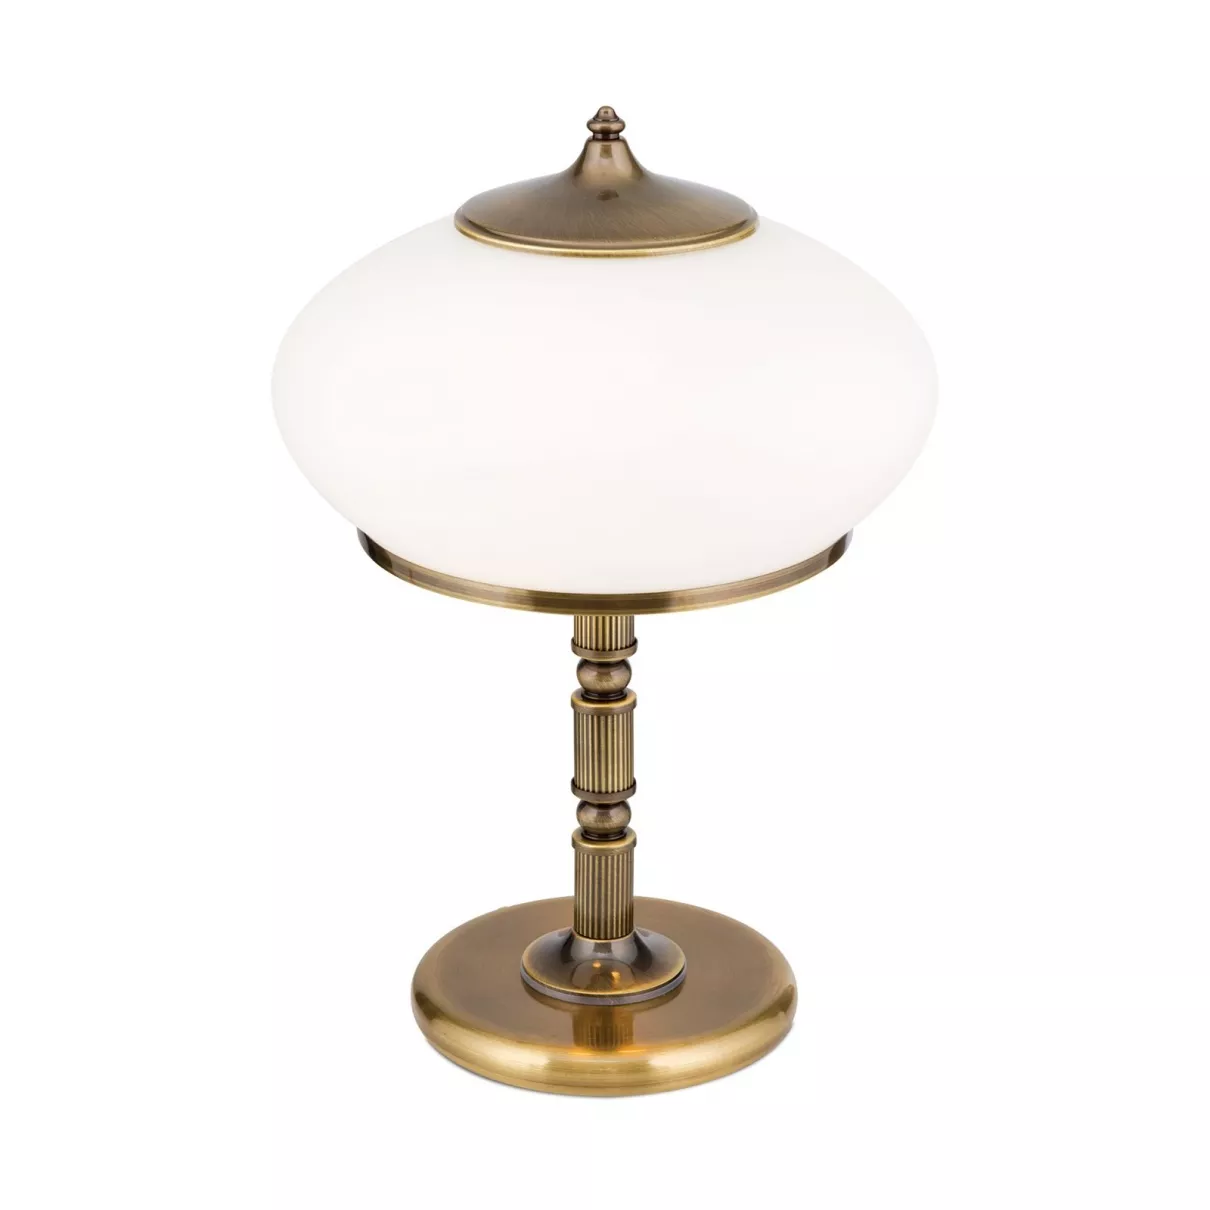 Bécsi Nosztalgia EMPIRE asztali lámpa, patina, opál búra, H:48cm - ORI-LA 4-801/2 Patina/386 opál patina